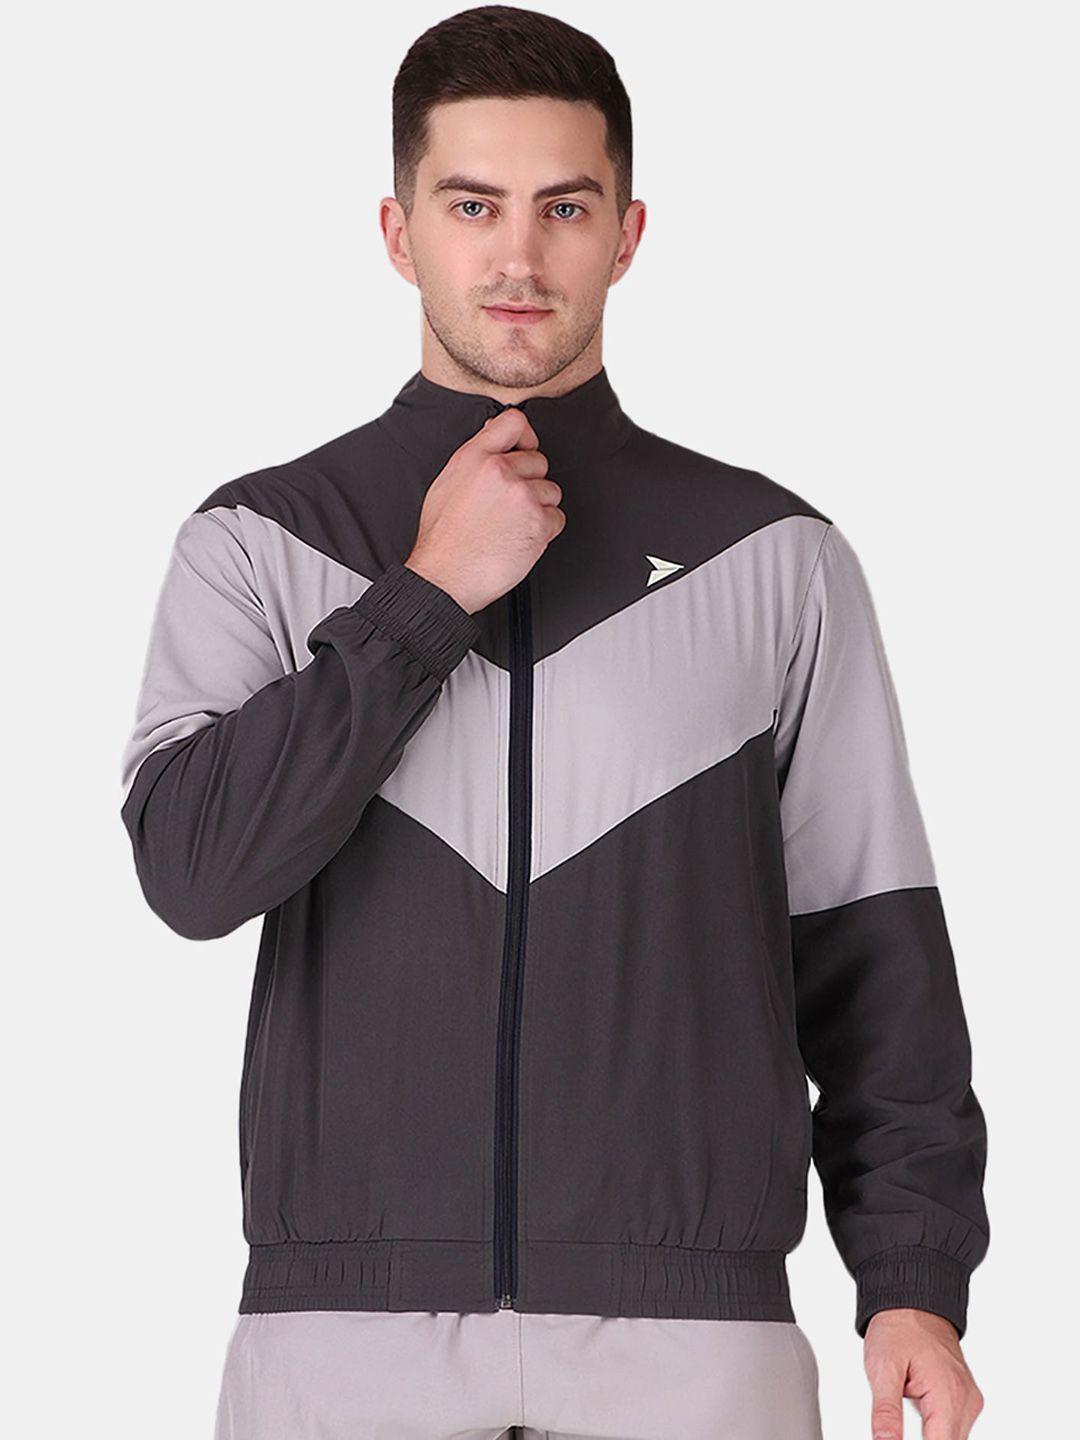 fitinc men grey black reflective strip antimicrobial outdoor sporty jacket